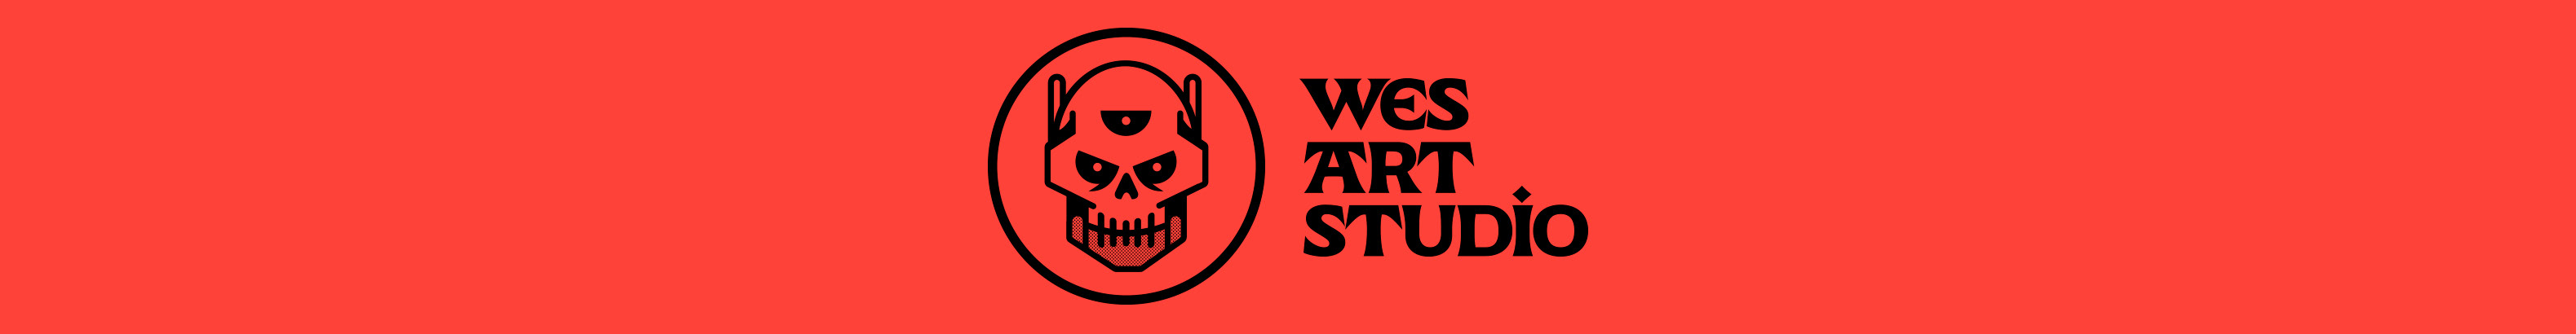 Wes Art Studio's profile banner